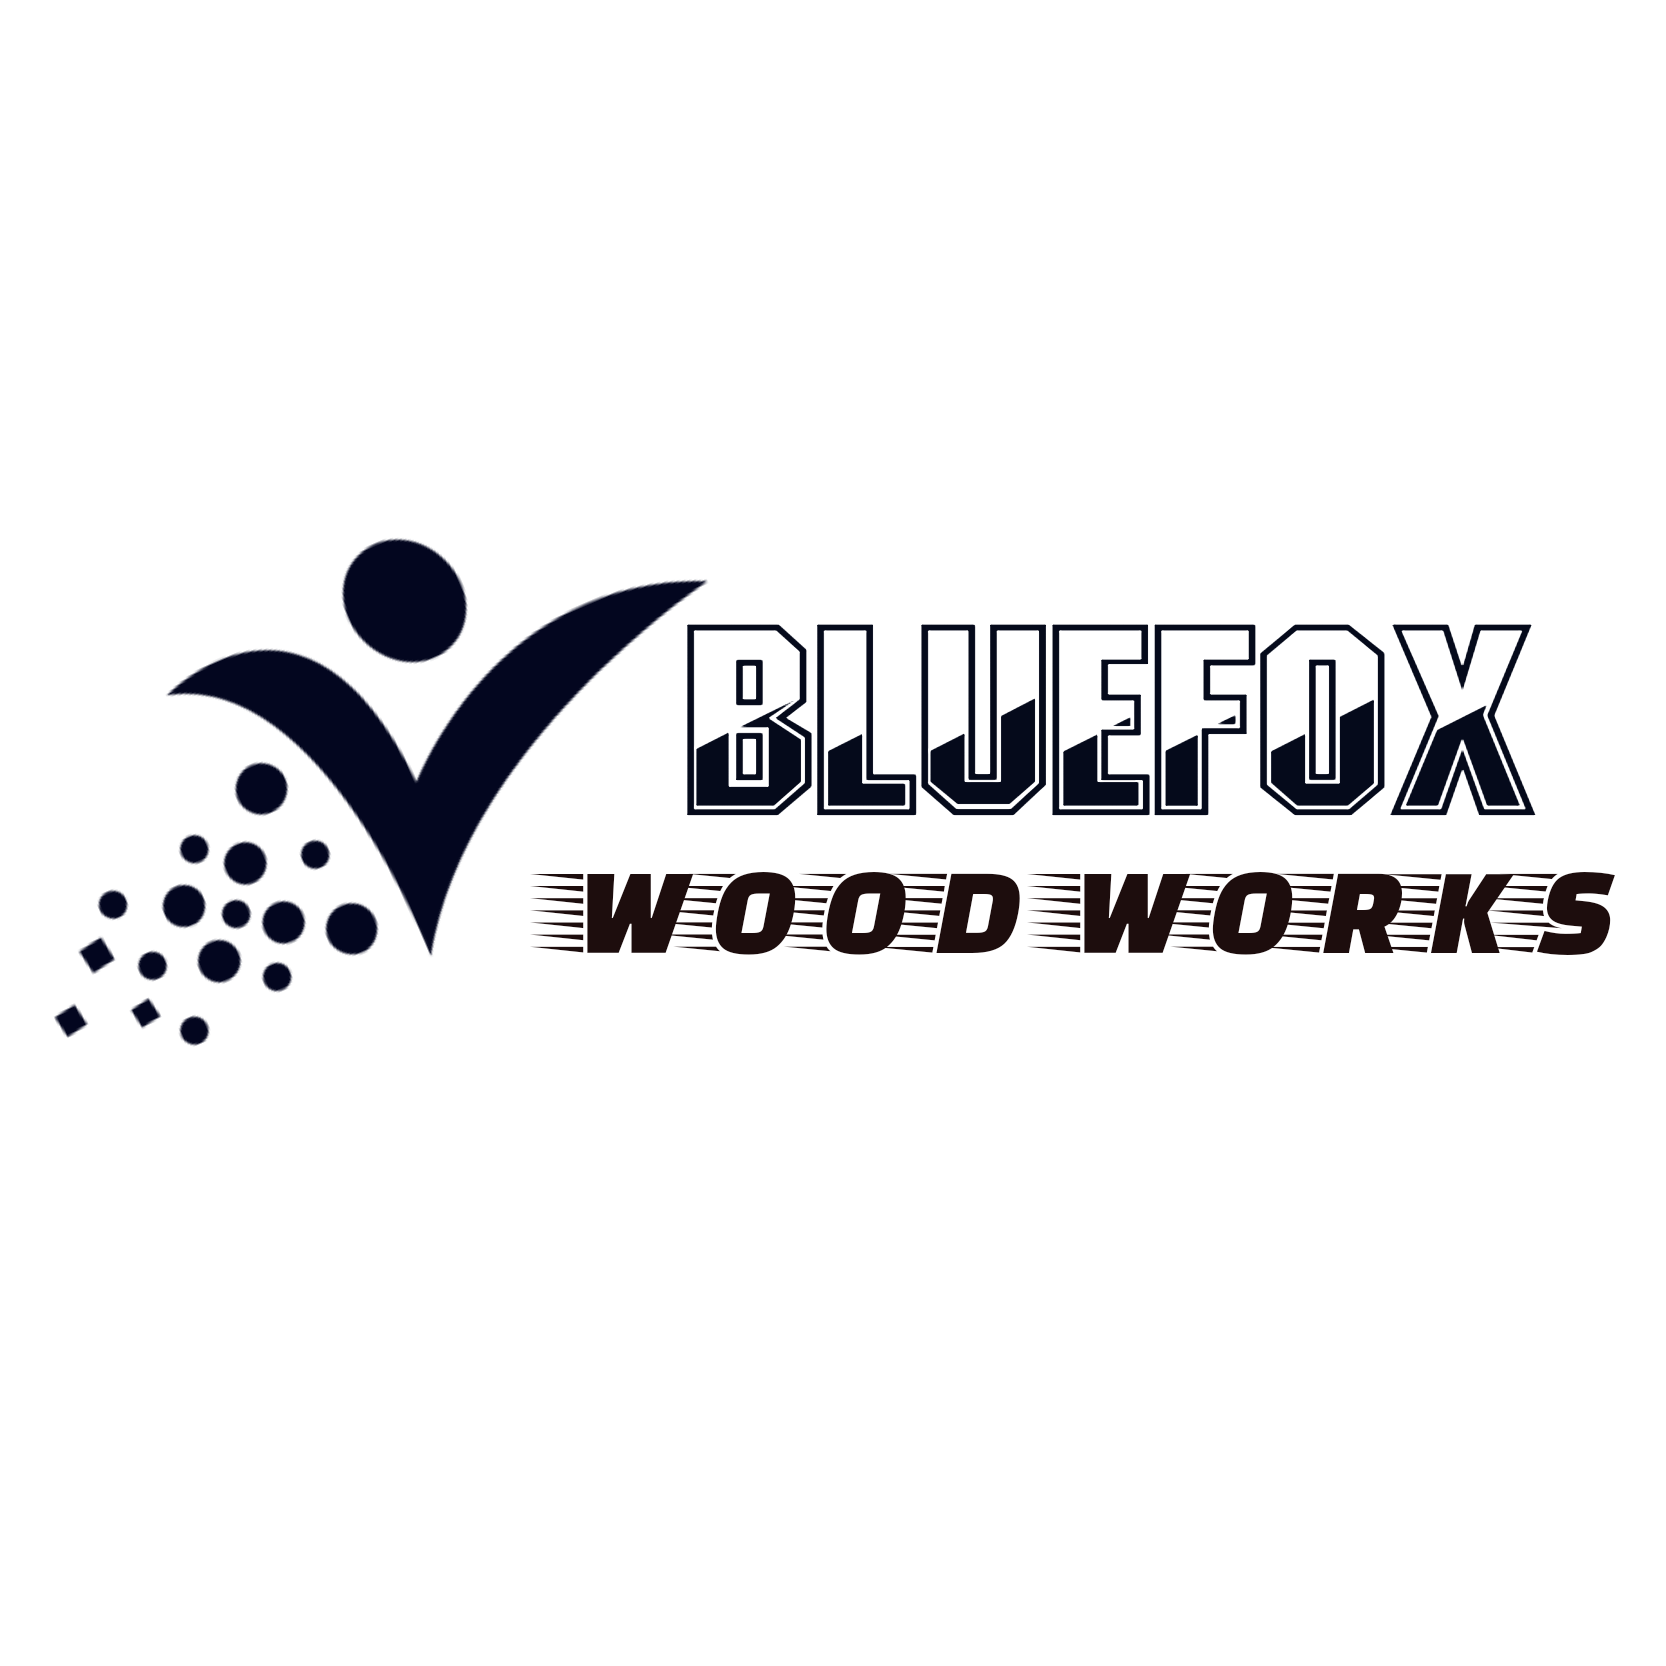 Bluefox Services|Legal Services|Professional Services